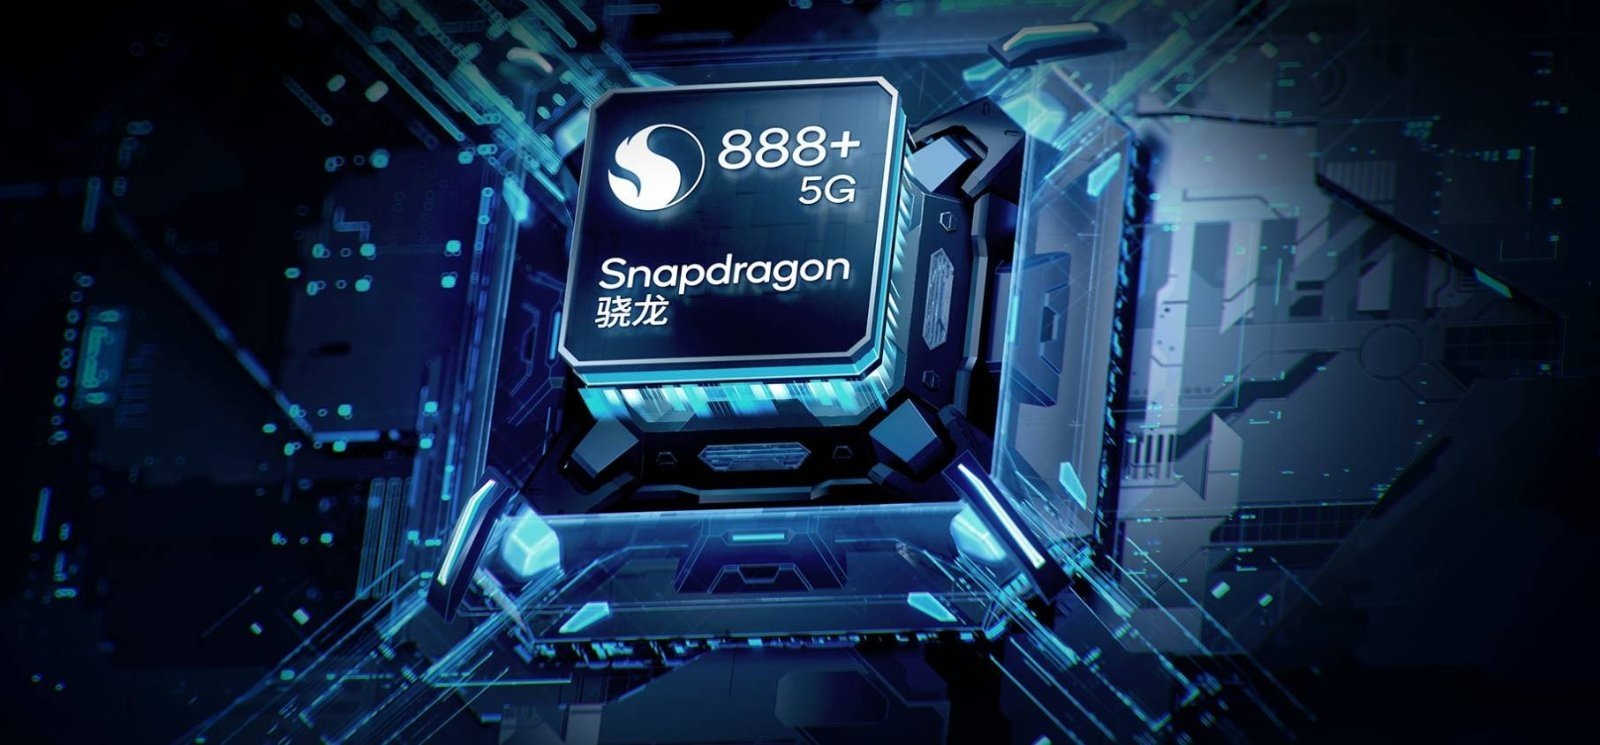 Snapdragon 888+ 5G